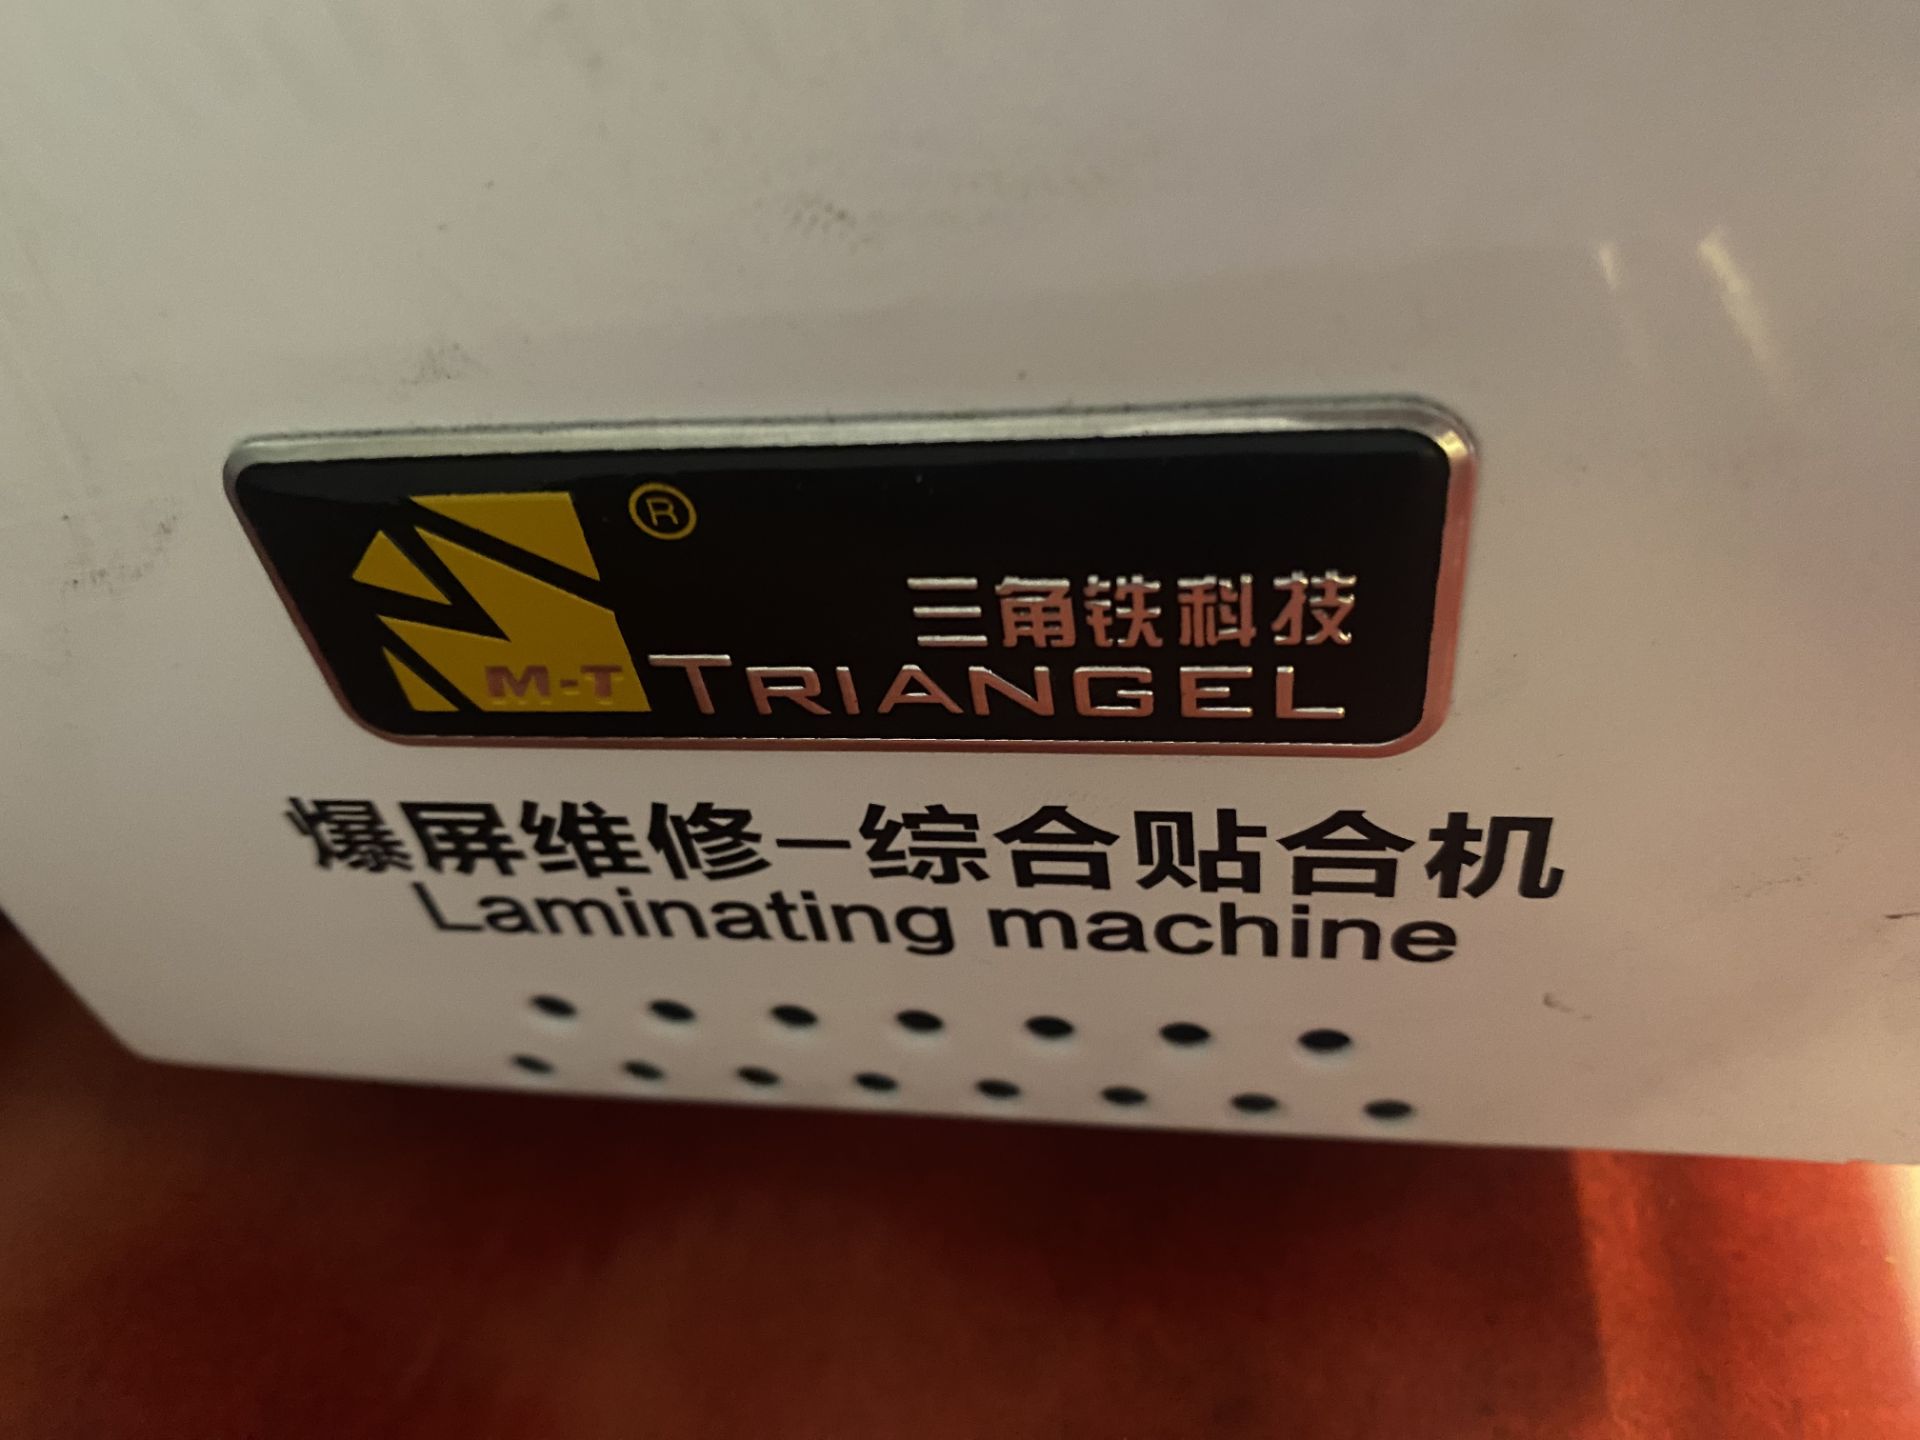 M-Triangel laminating machine, - Image 4 of 9